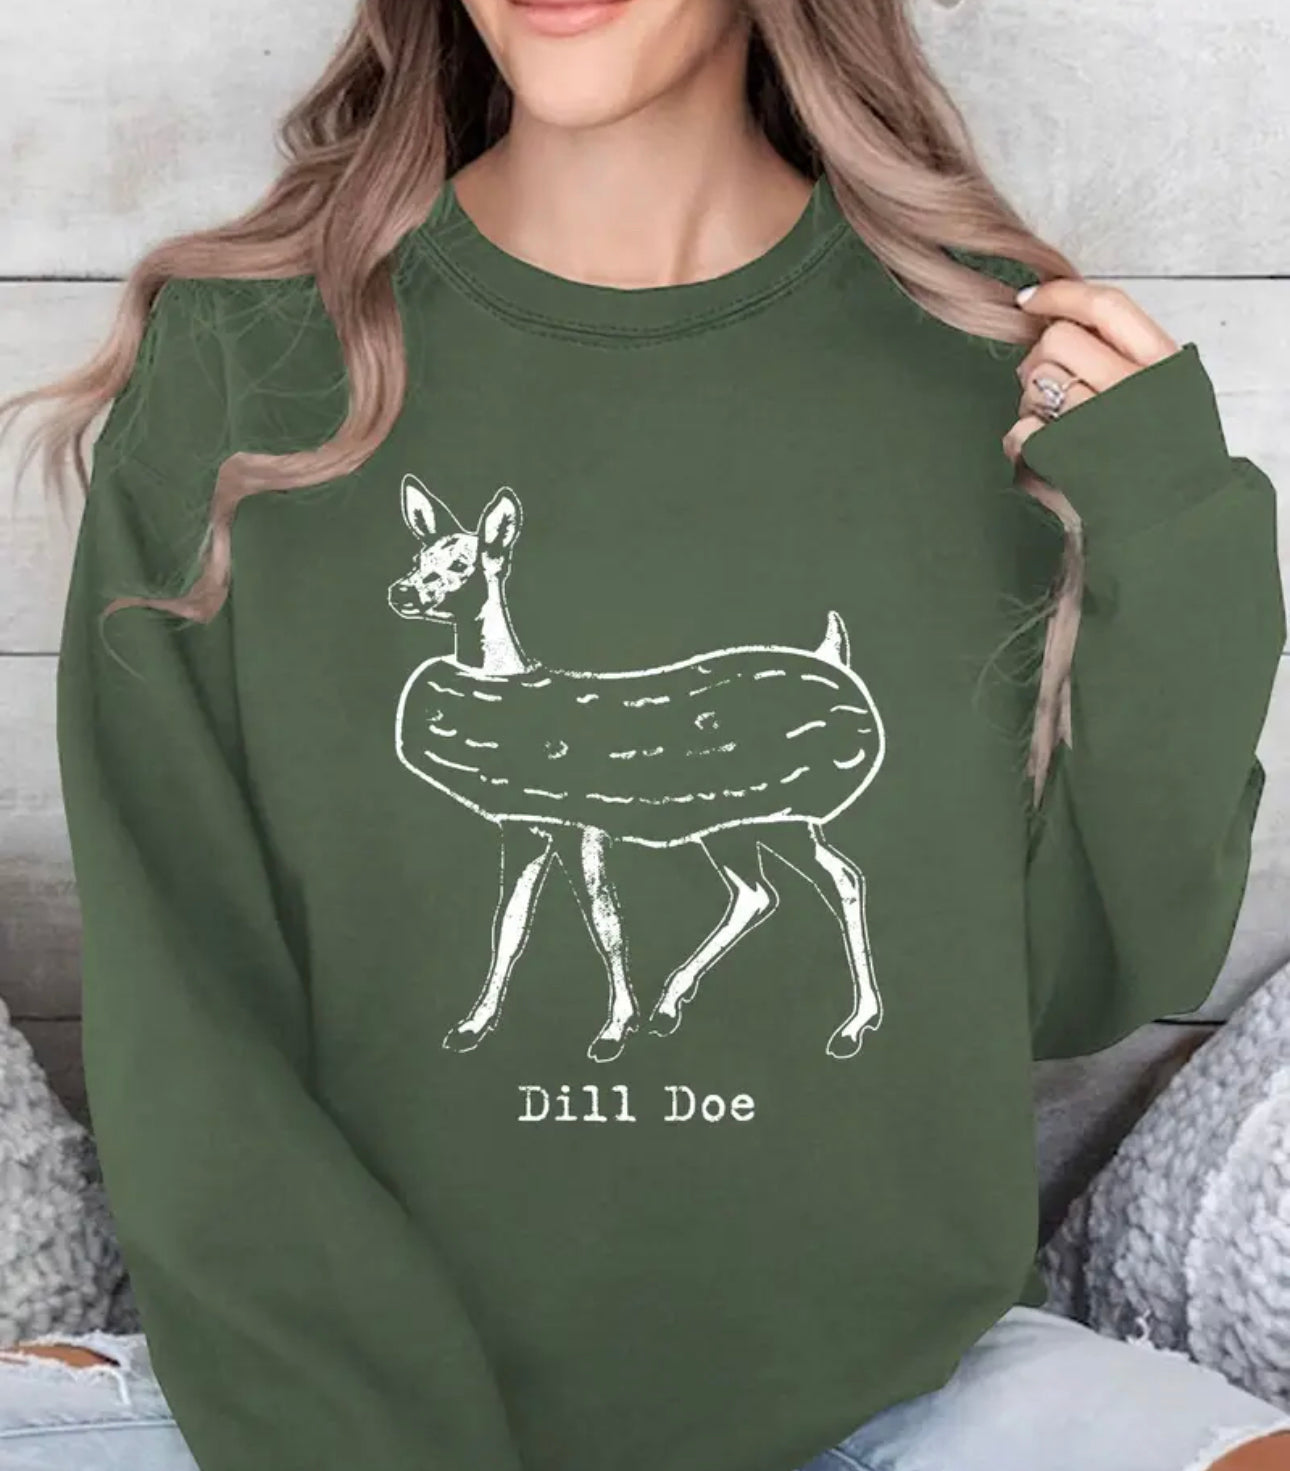 Deer Print Pullover Sweatshirt, Casual Long Sleeve Crew Neck Sweatshirt For Fall & Winter, Women's Clothing